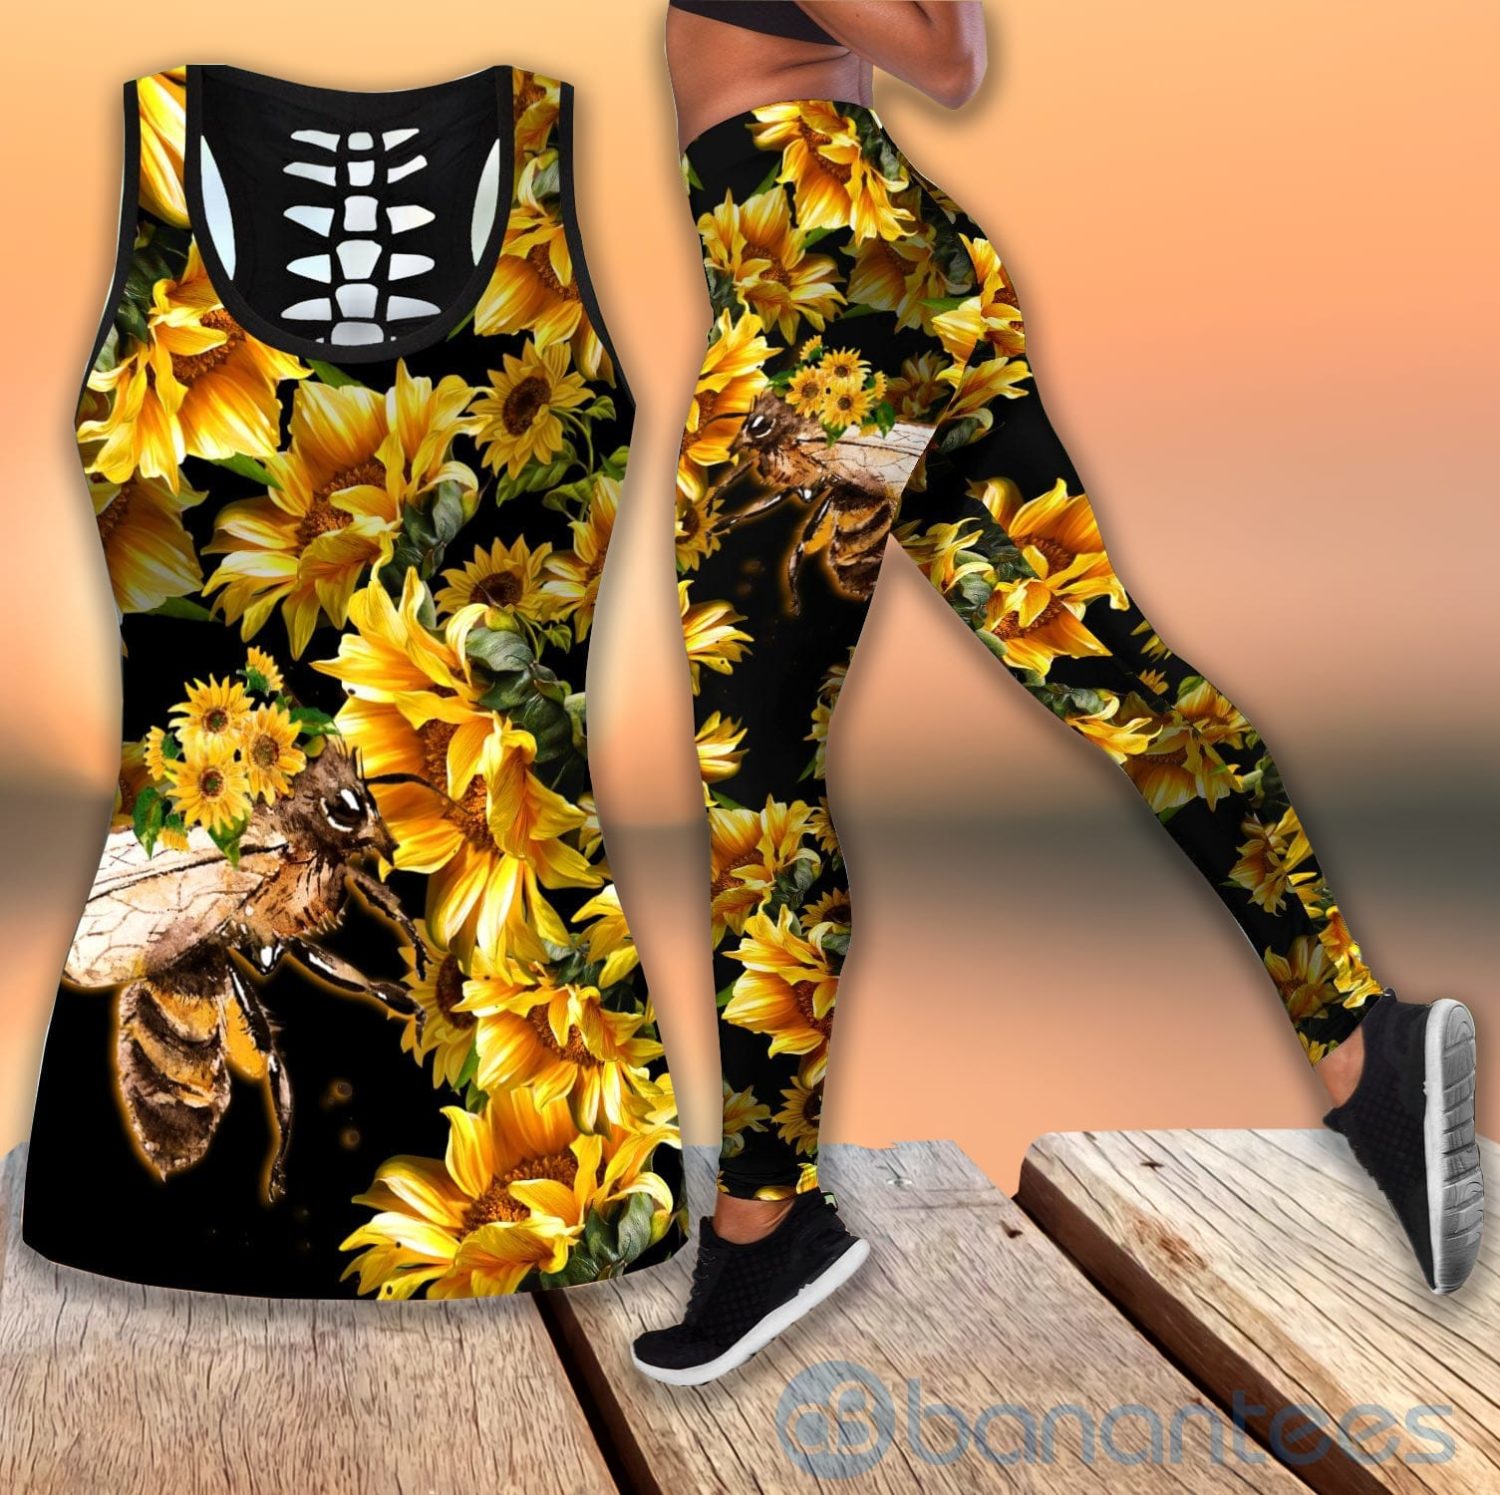 Love Bee Mandala Sunflower Tank Top Legging Set Outfit